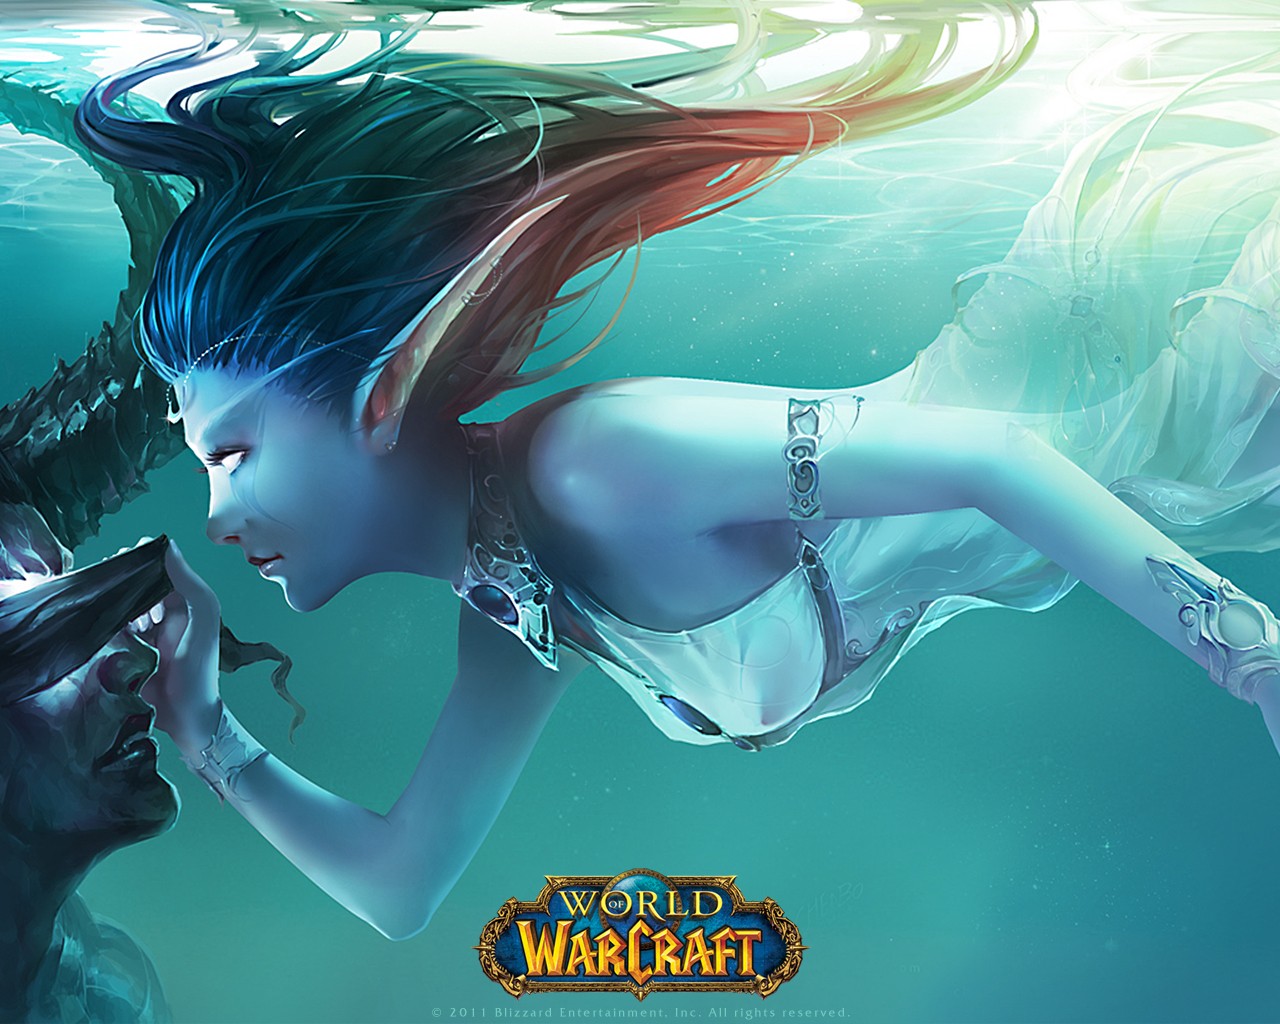 General 1280x1024 World of Warcraft Illidan Stormrage Illidan video games fantasy girl Chenbo video game girls pointy ears underwater dark hair PC gaming